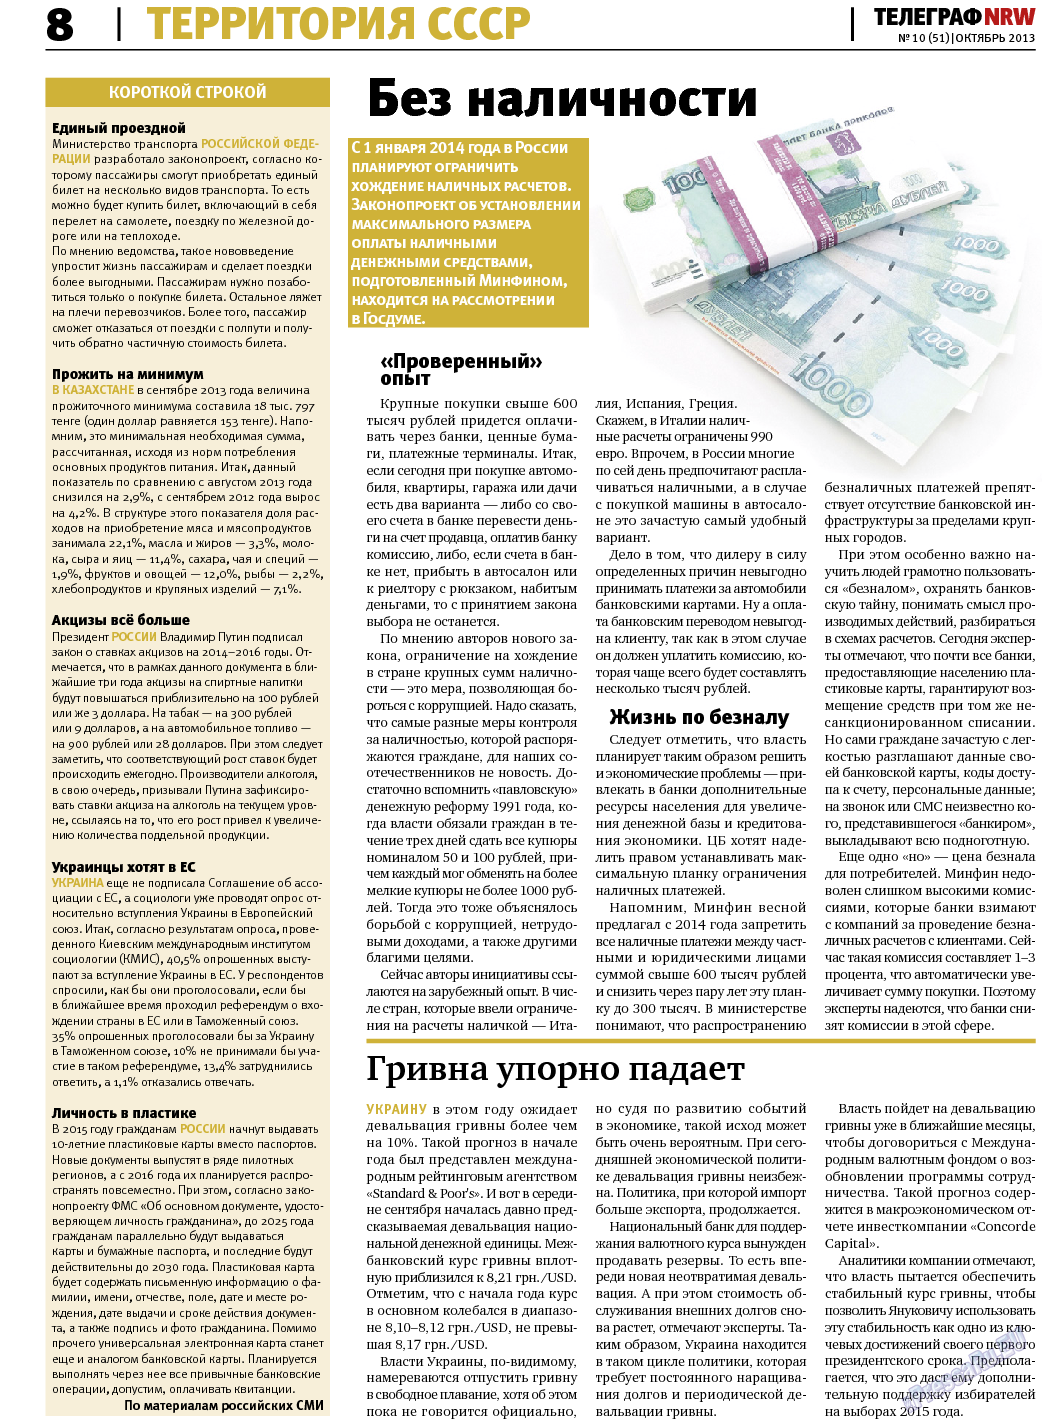 Телеграф NRW, газета. 2013 №10 стр.8